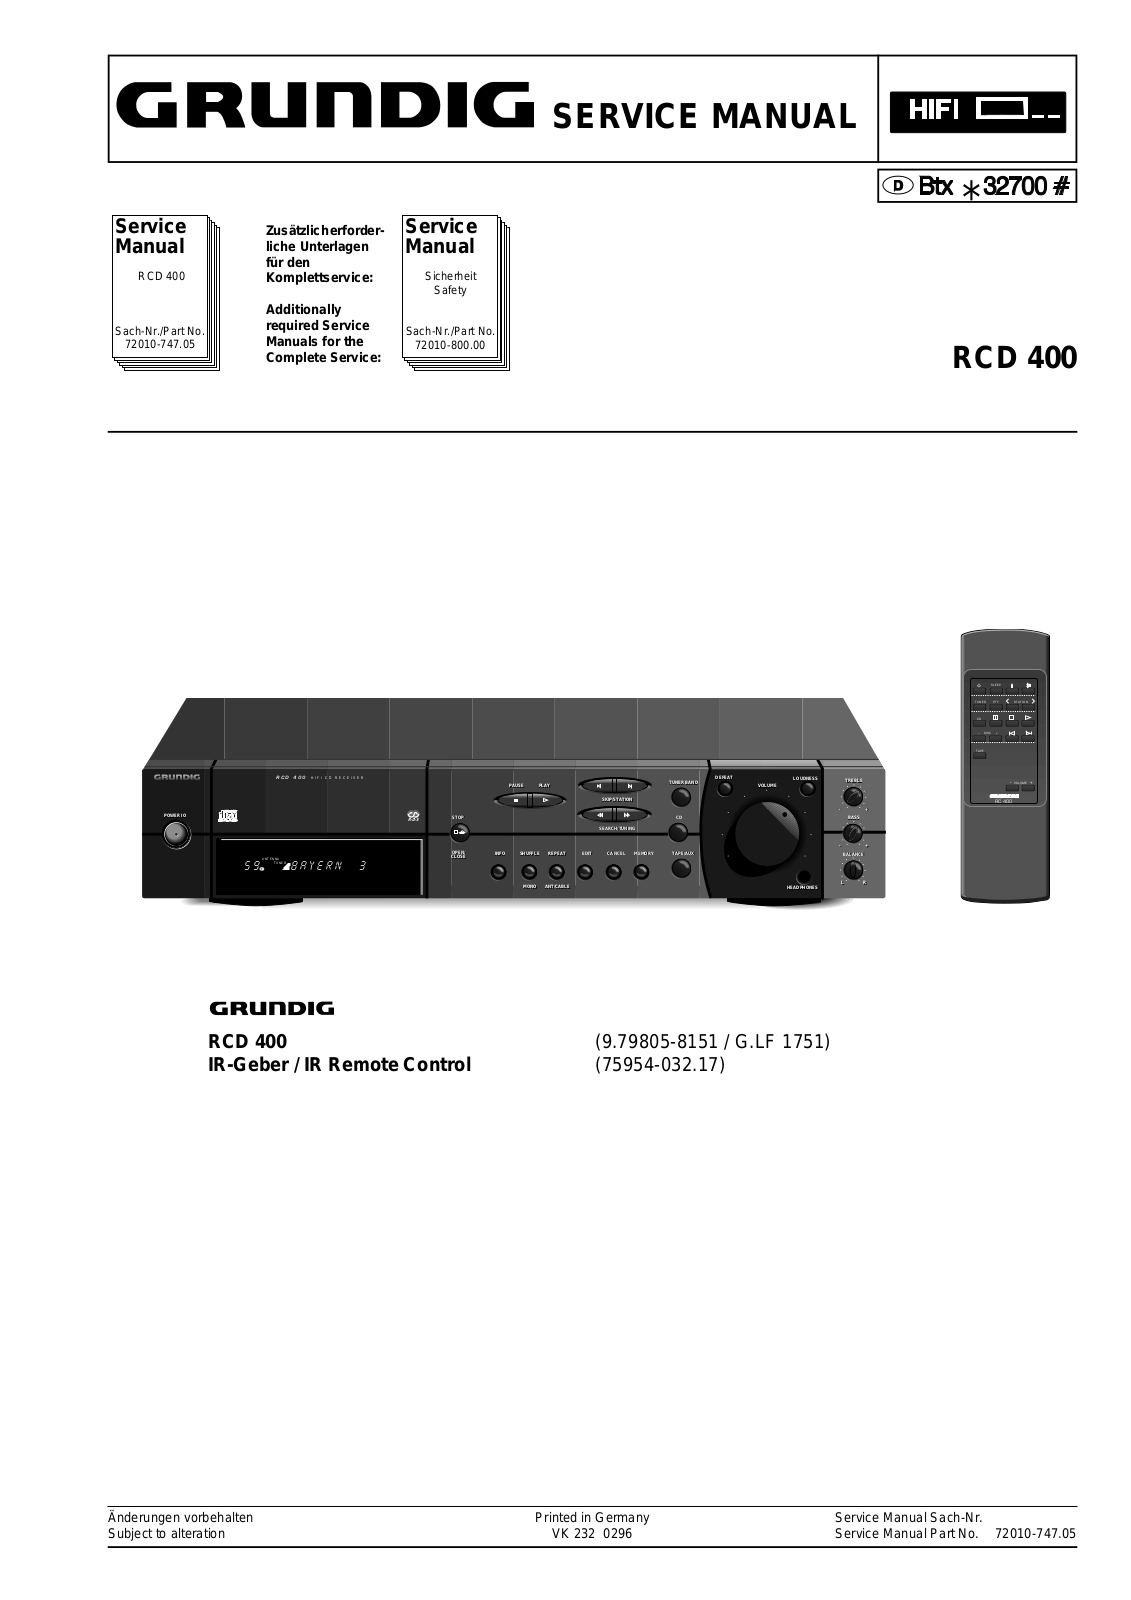 Grundig RCD-400 Service Manual